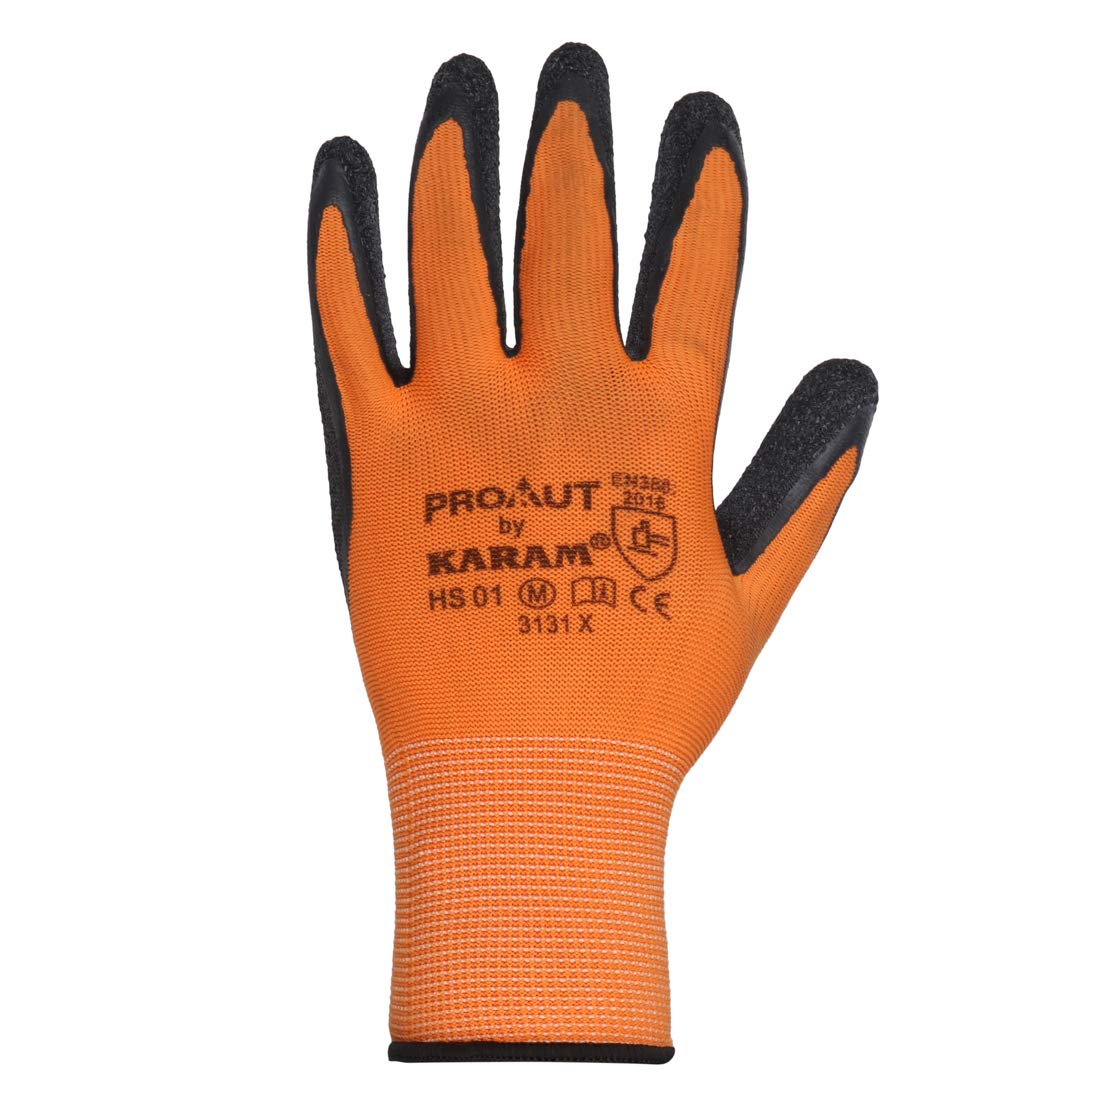 /storage/photos/1/karam new product/Karam Safety gloves hs 01 1.png